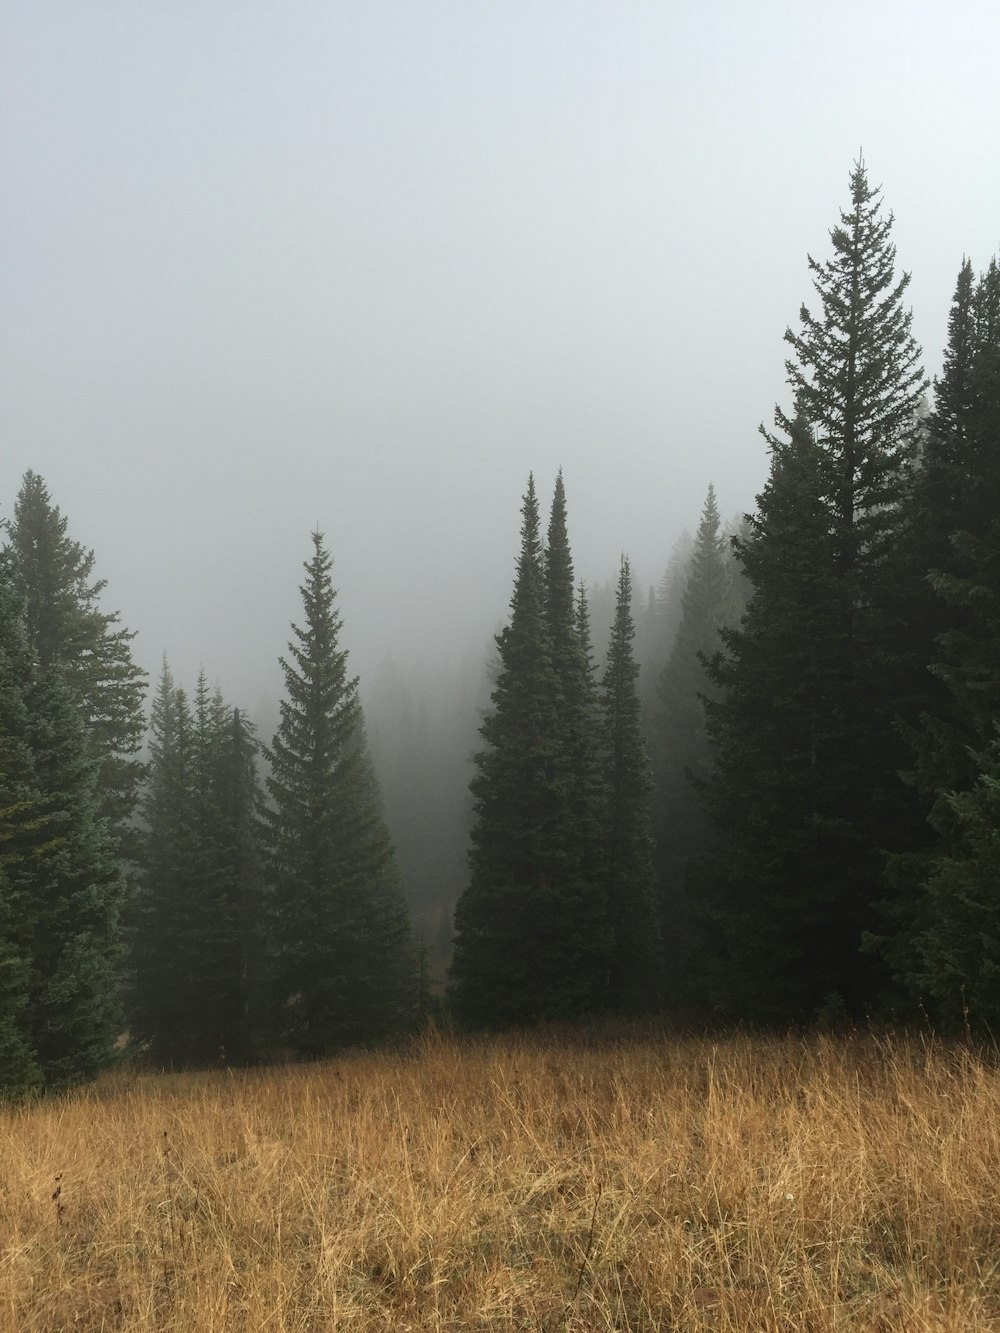 green pine trees below a cloudy sky